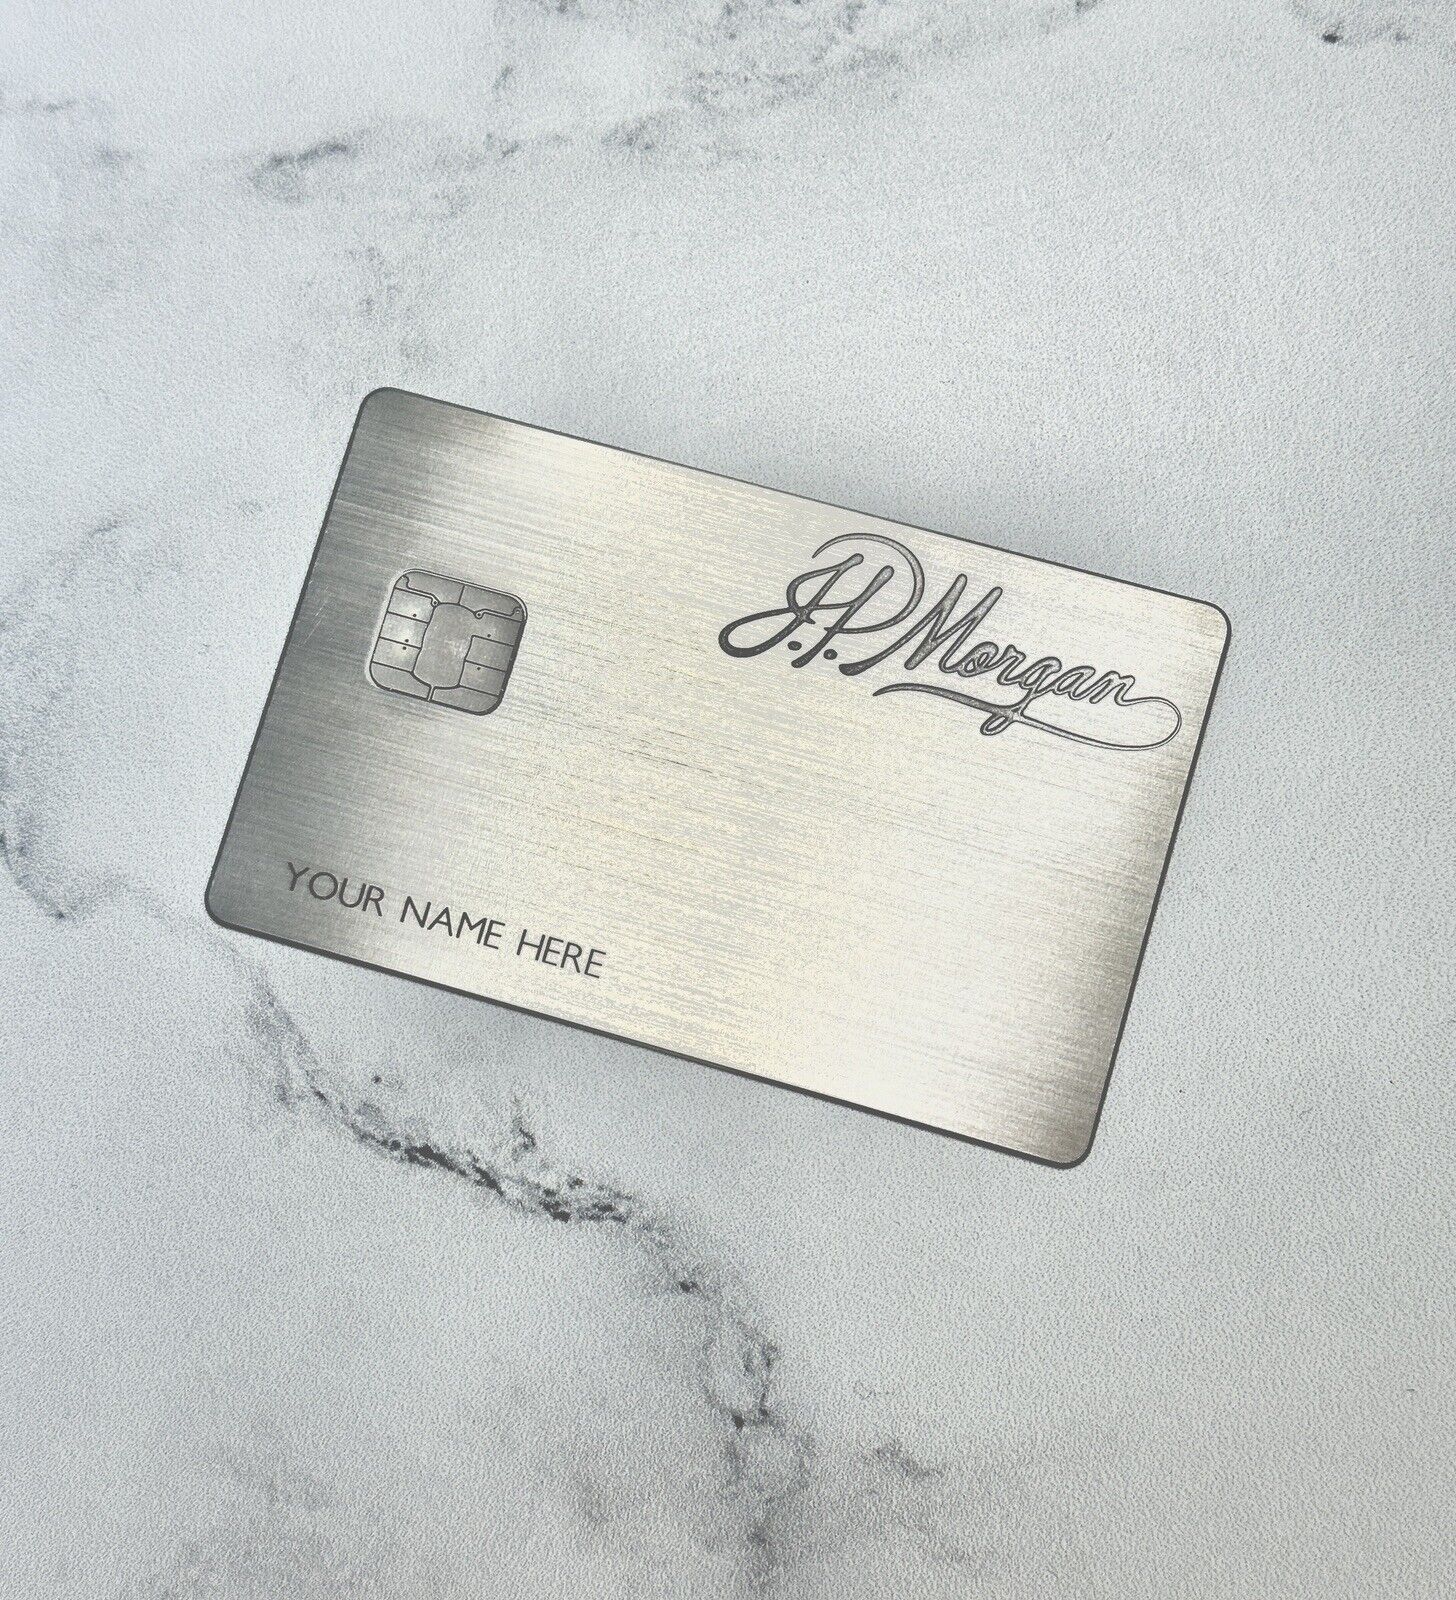 JP Morgan Reserve CUSTOM Chip + Stripe Transfer Palladium Silver Novelty Card